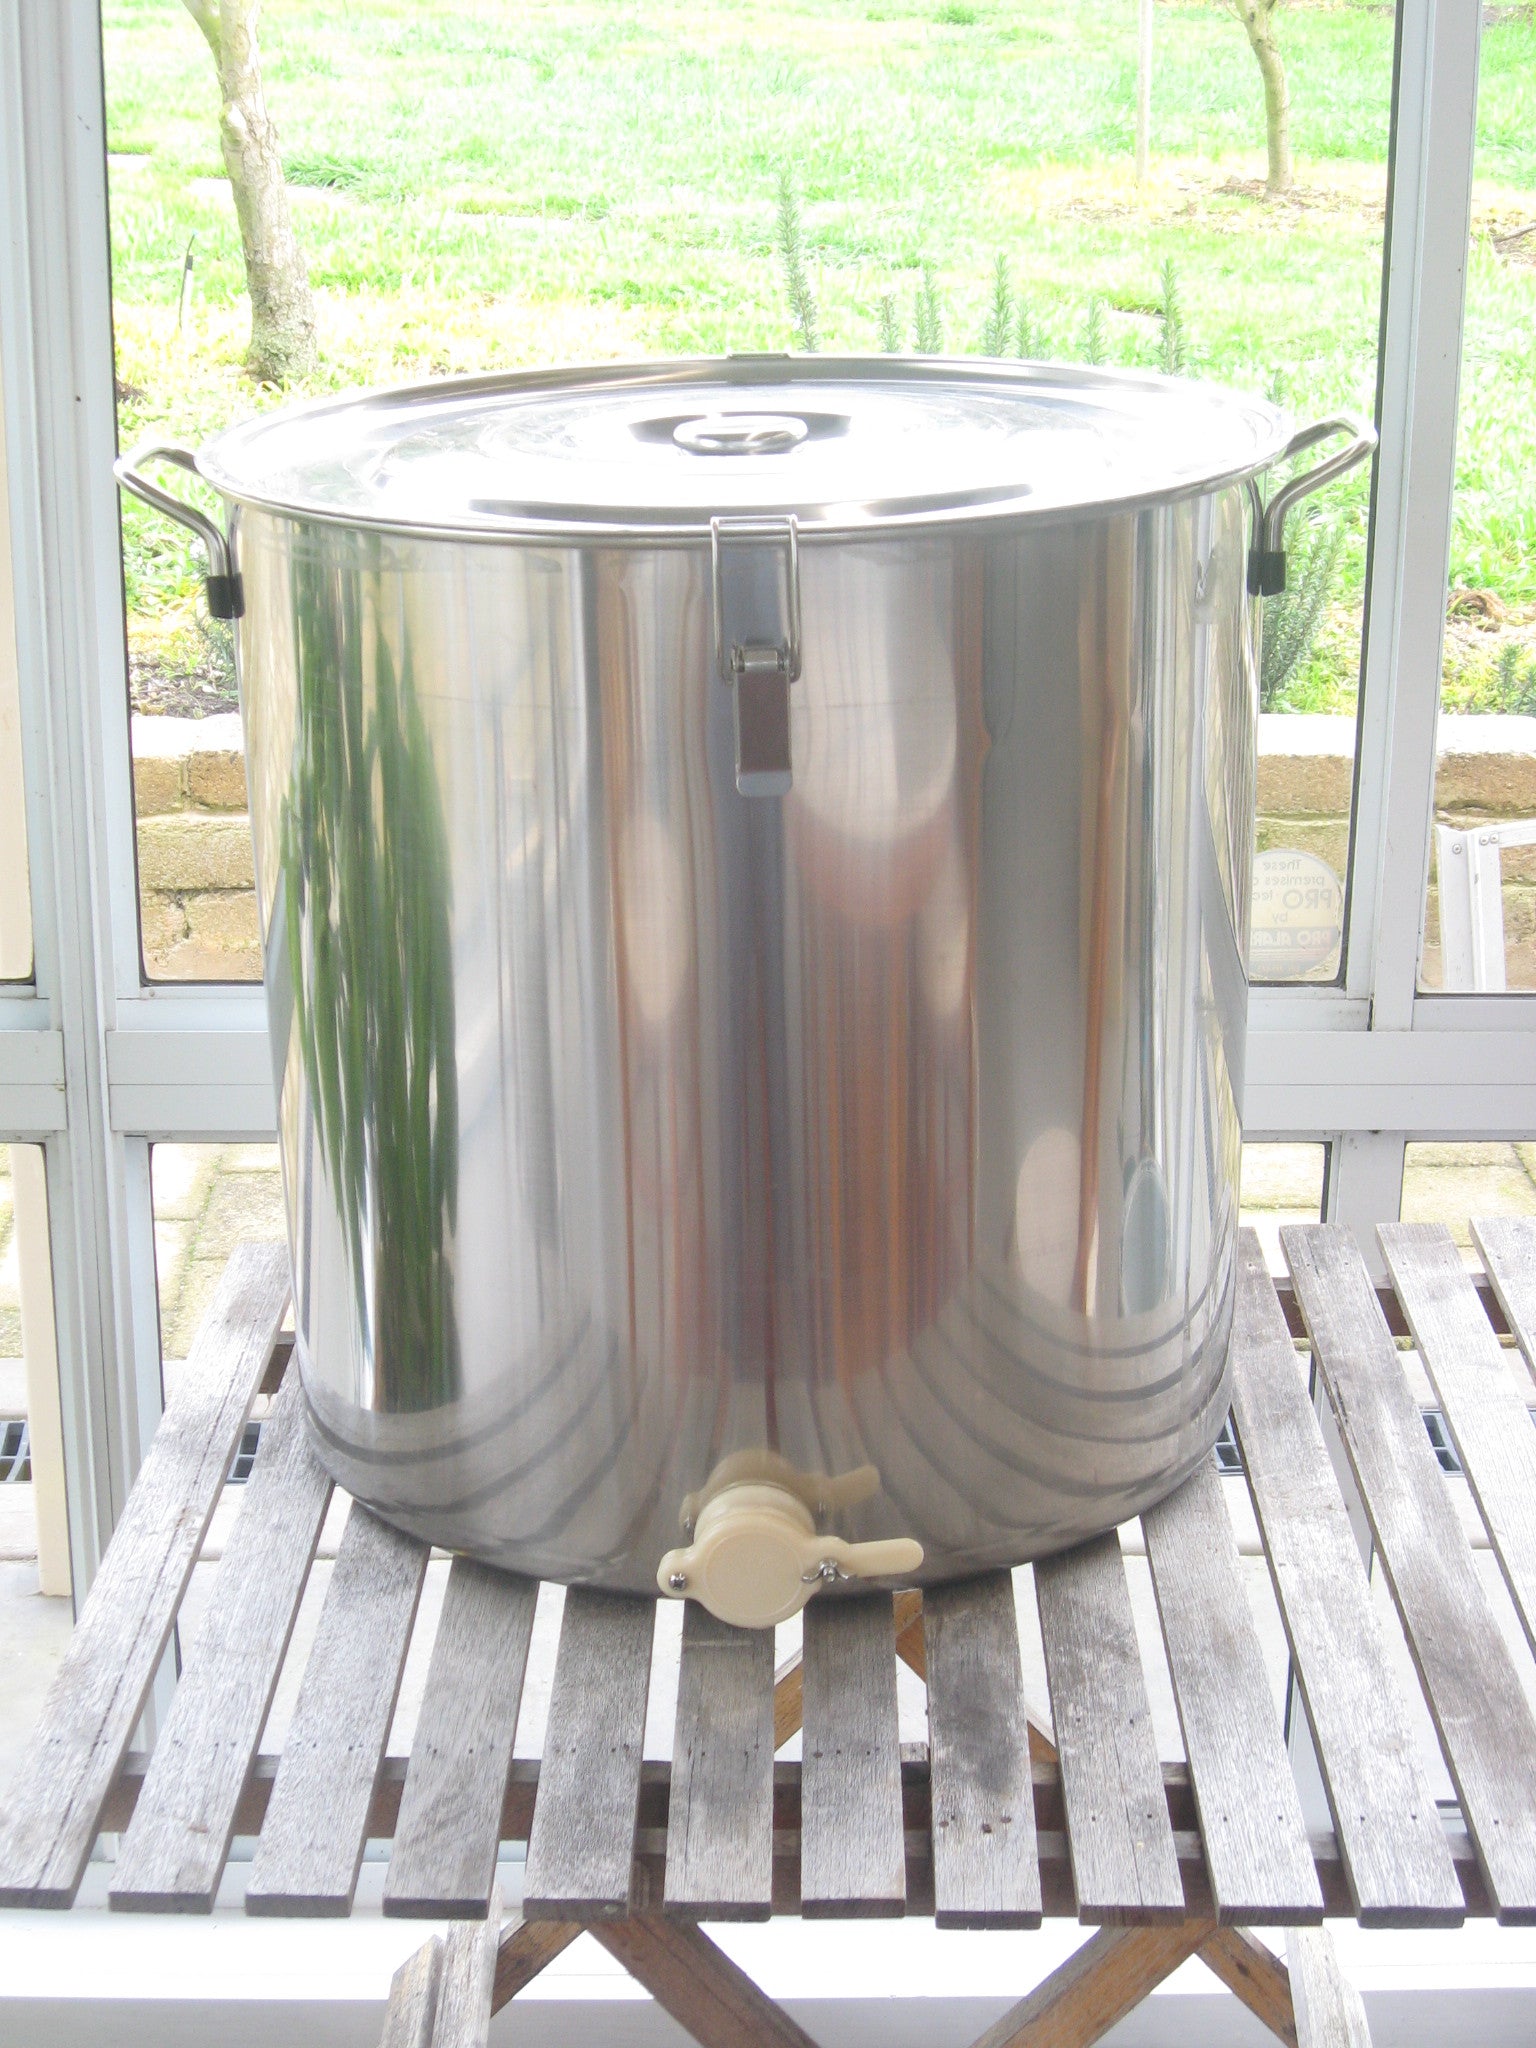 Stainless Steel Honey Tank